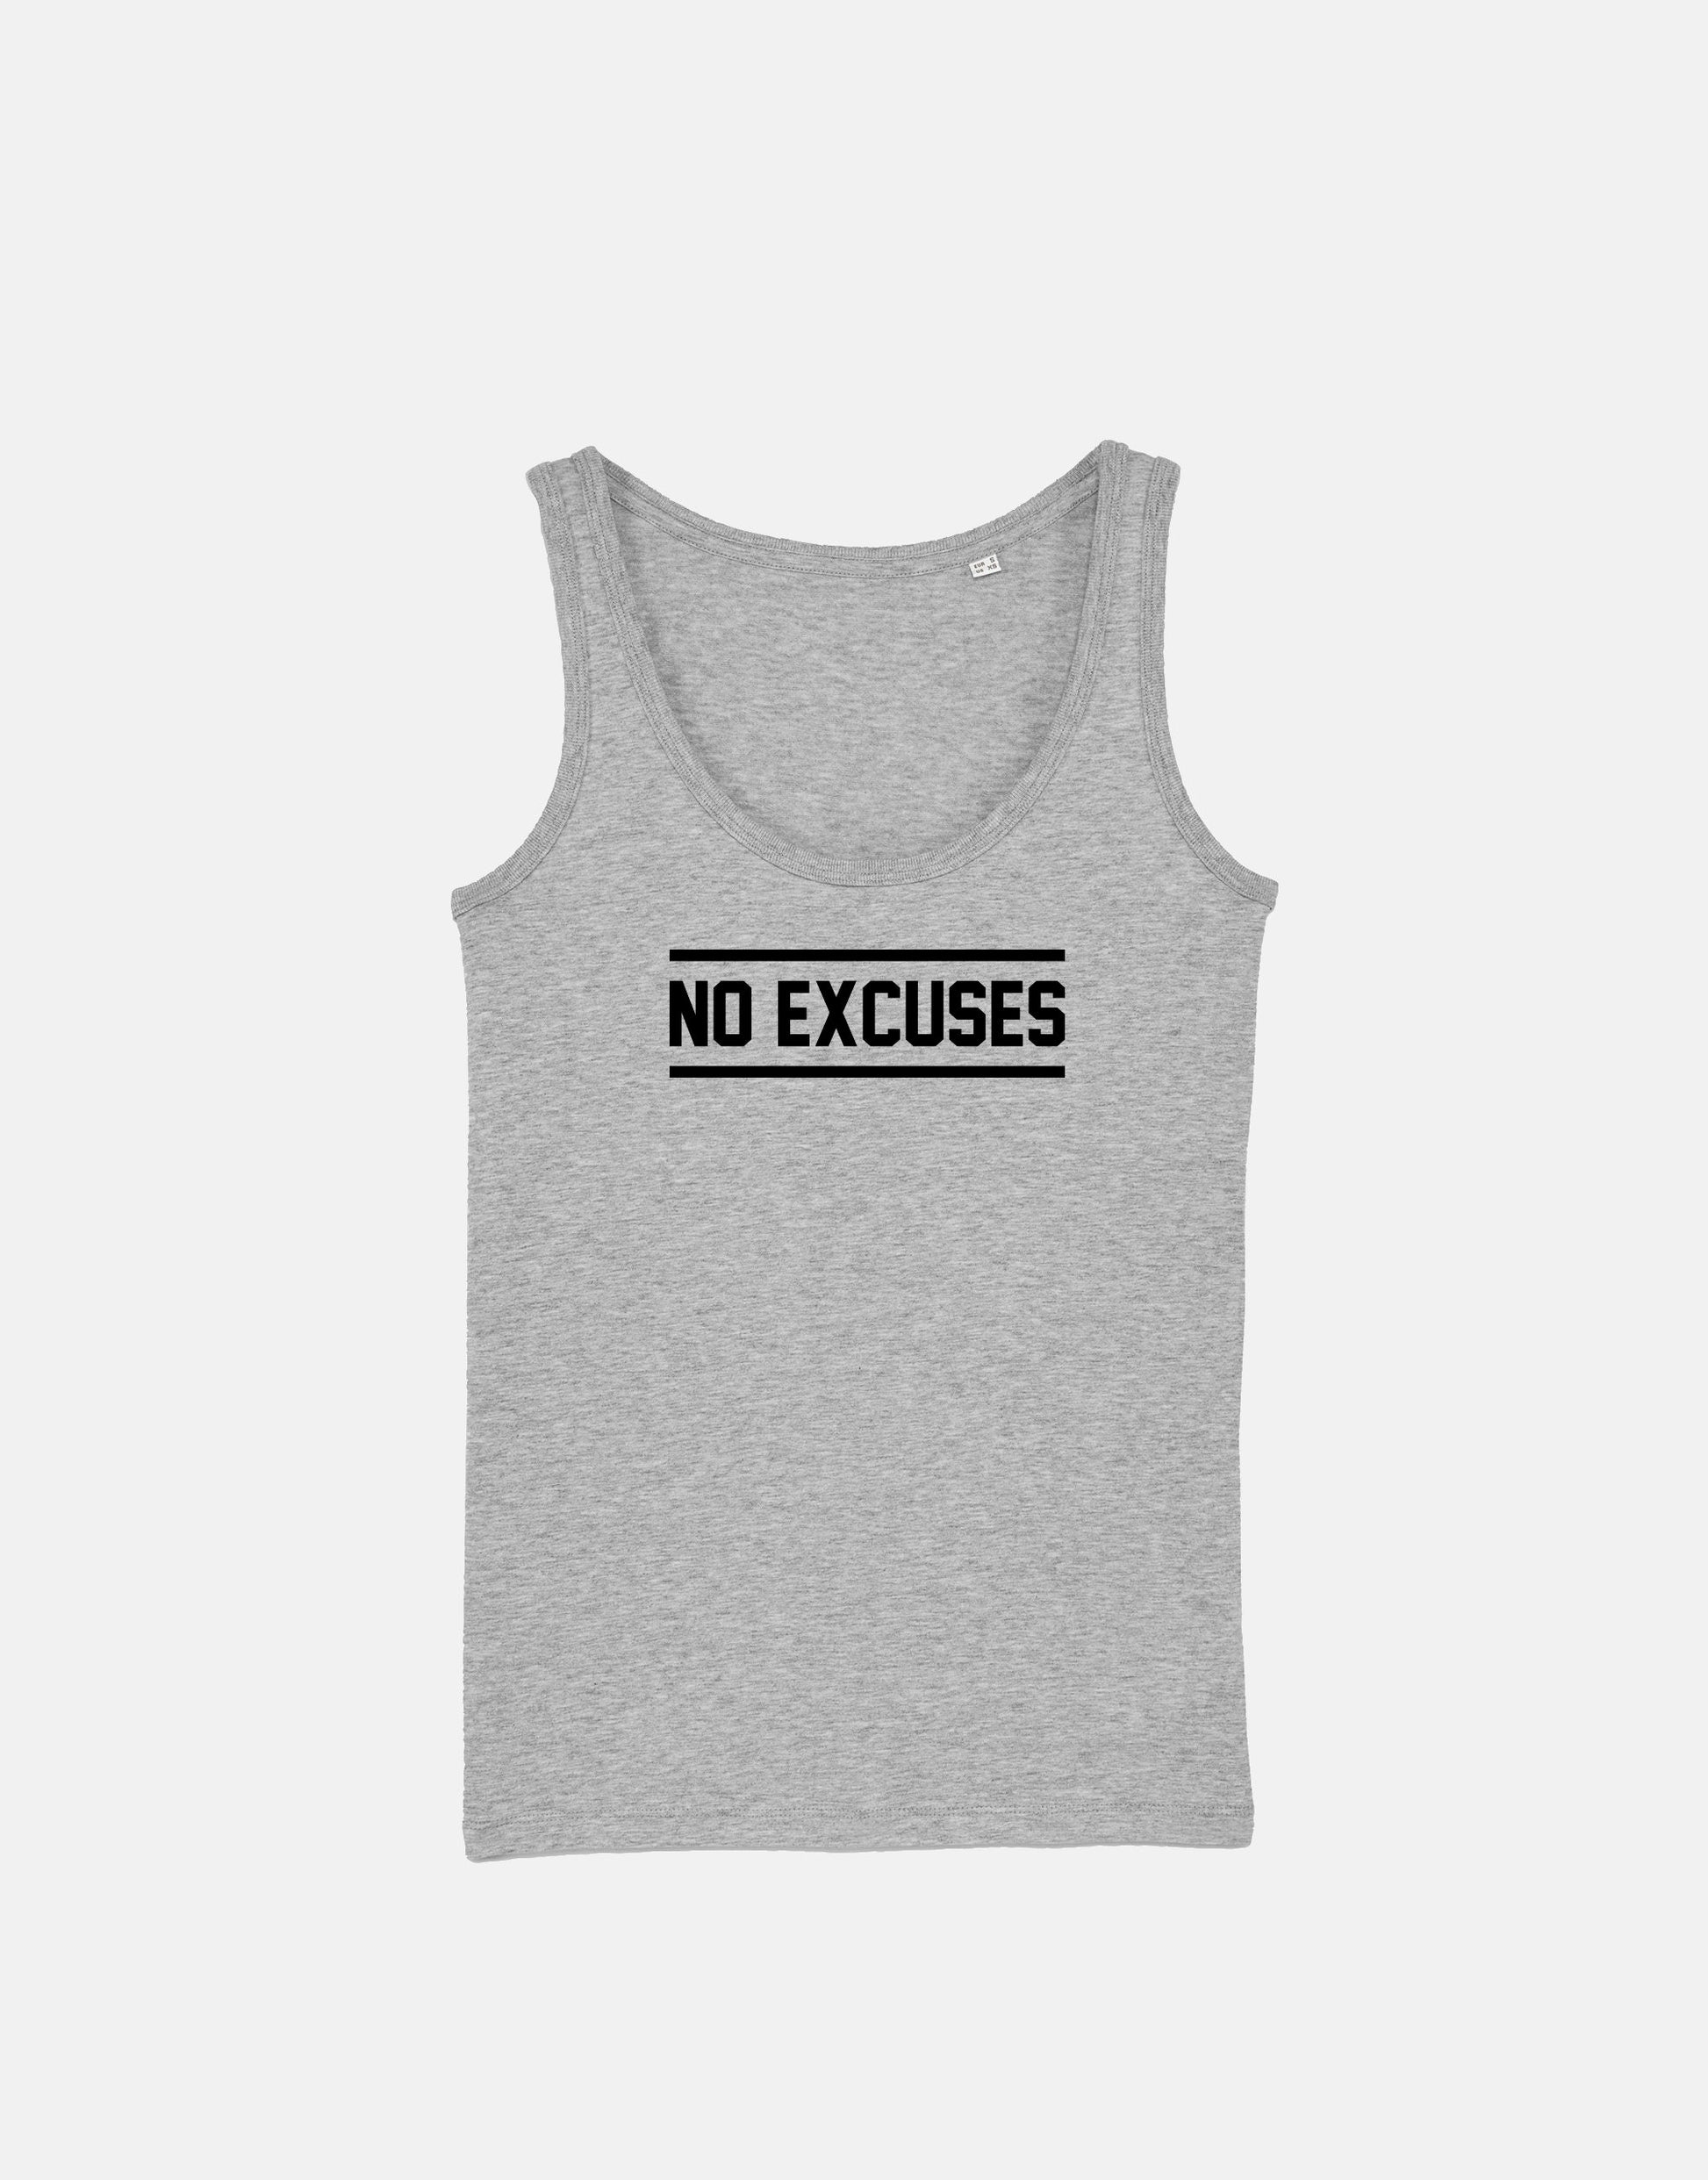 No Excuses Tank Top Women's Workout Tank Workout Shirt